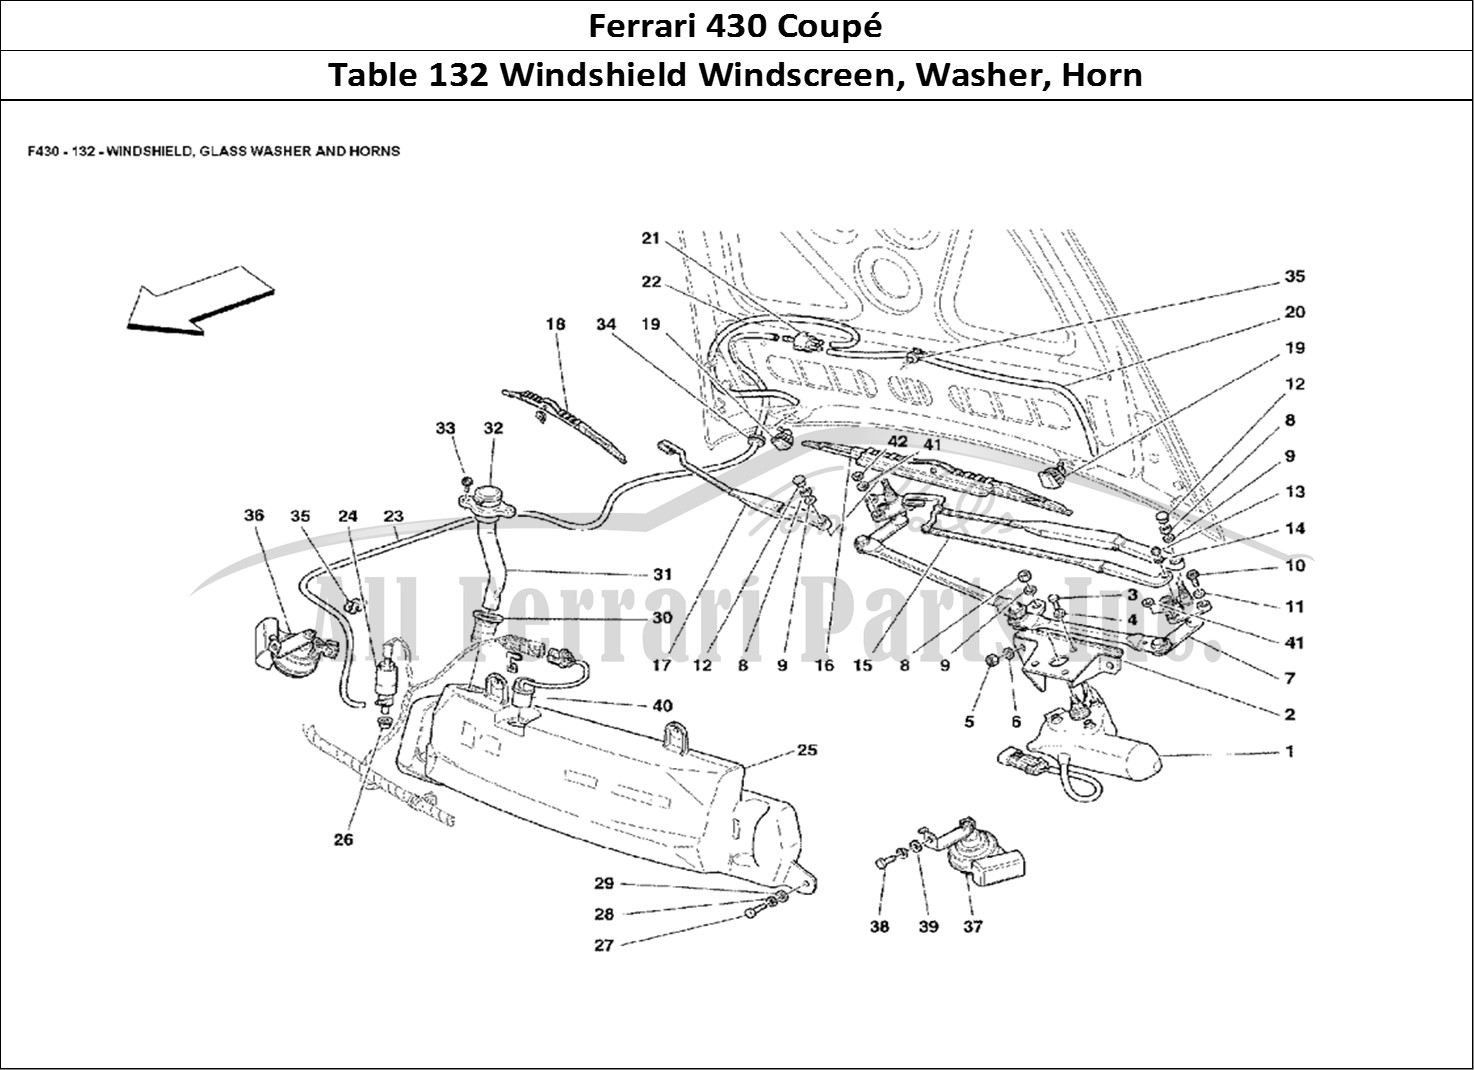 Ferrari Parts Ferrari 430 Coup Page 132 Windshield, Glass Washer